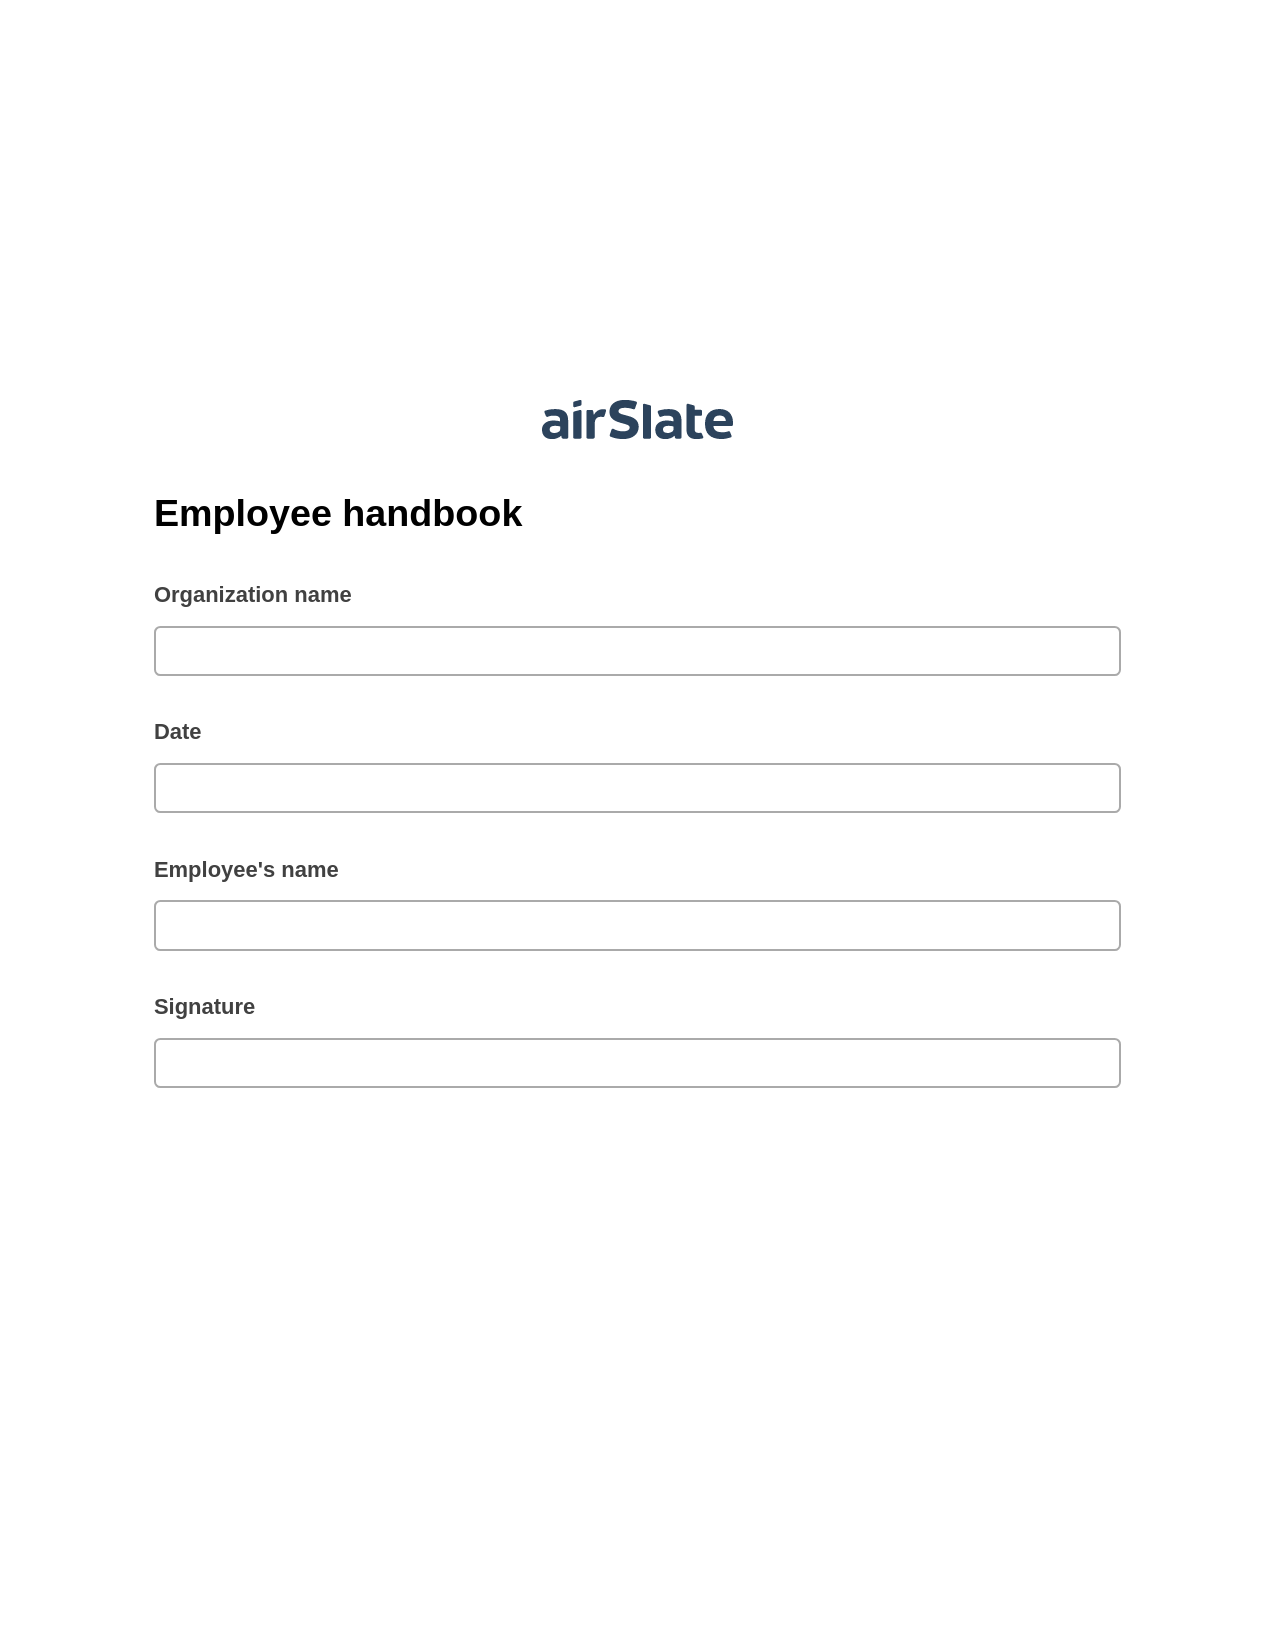 Employee handbook Pre-fill Slate from MS Dynamics 365 Records Bot, Slack Notification Bot, Google Drive Bot